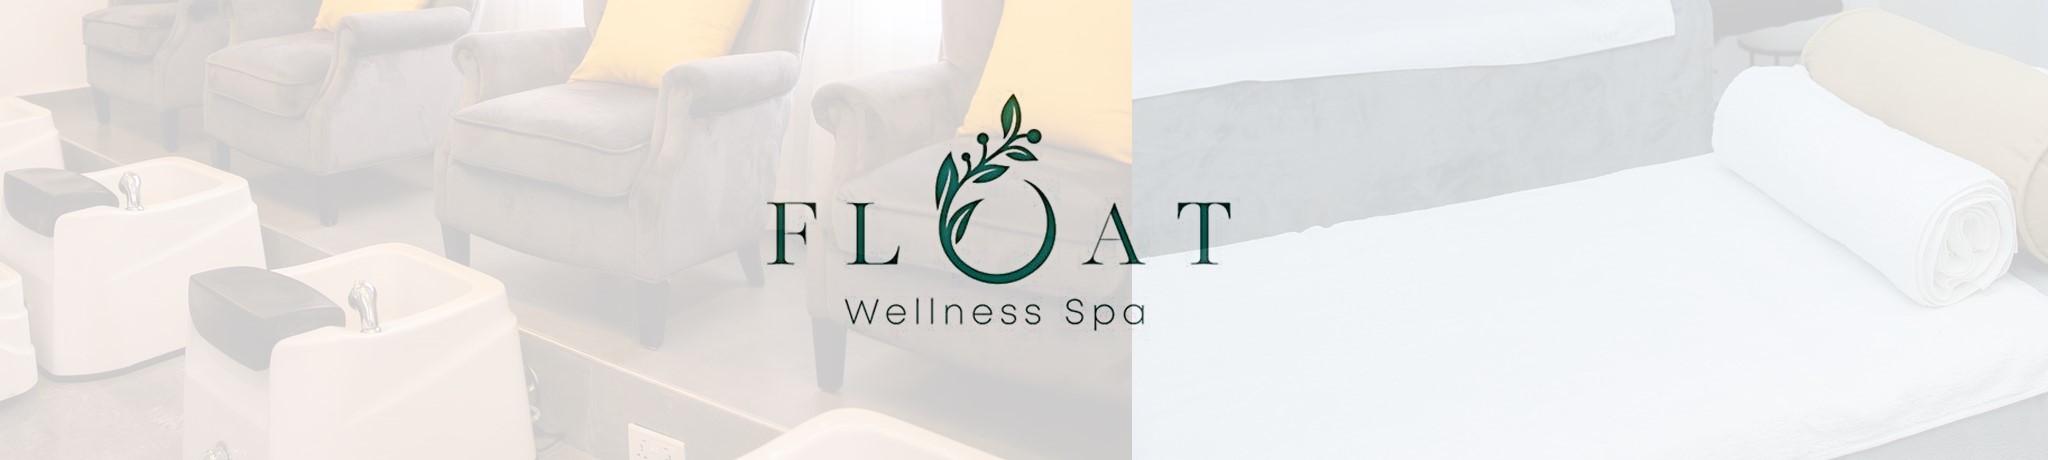 Float Wellness Spa